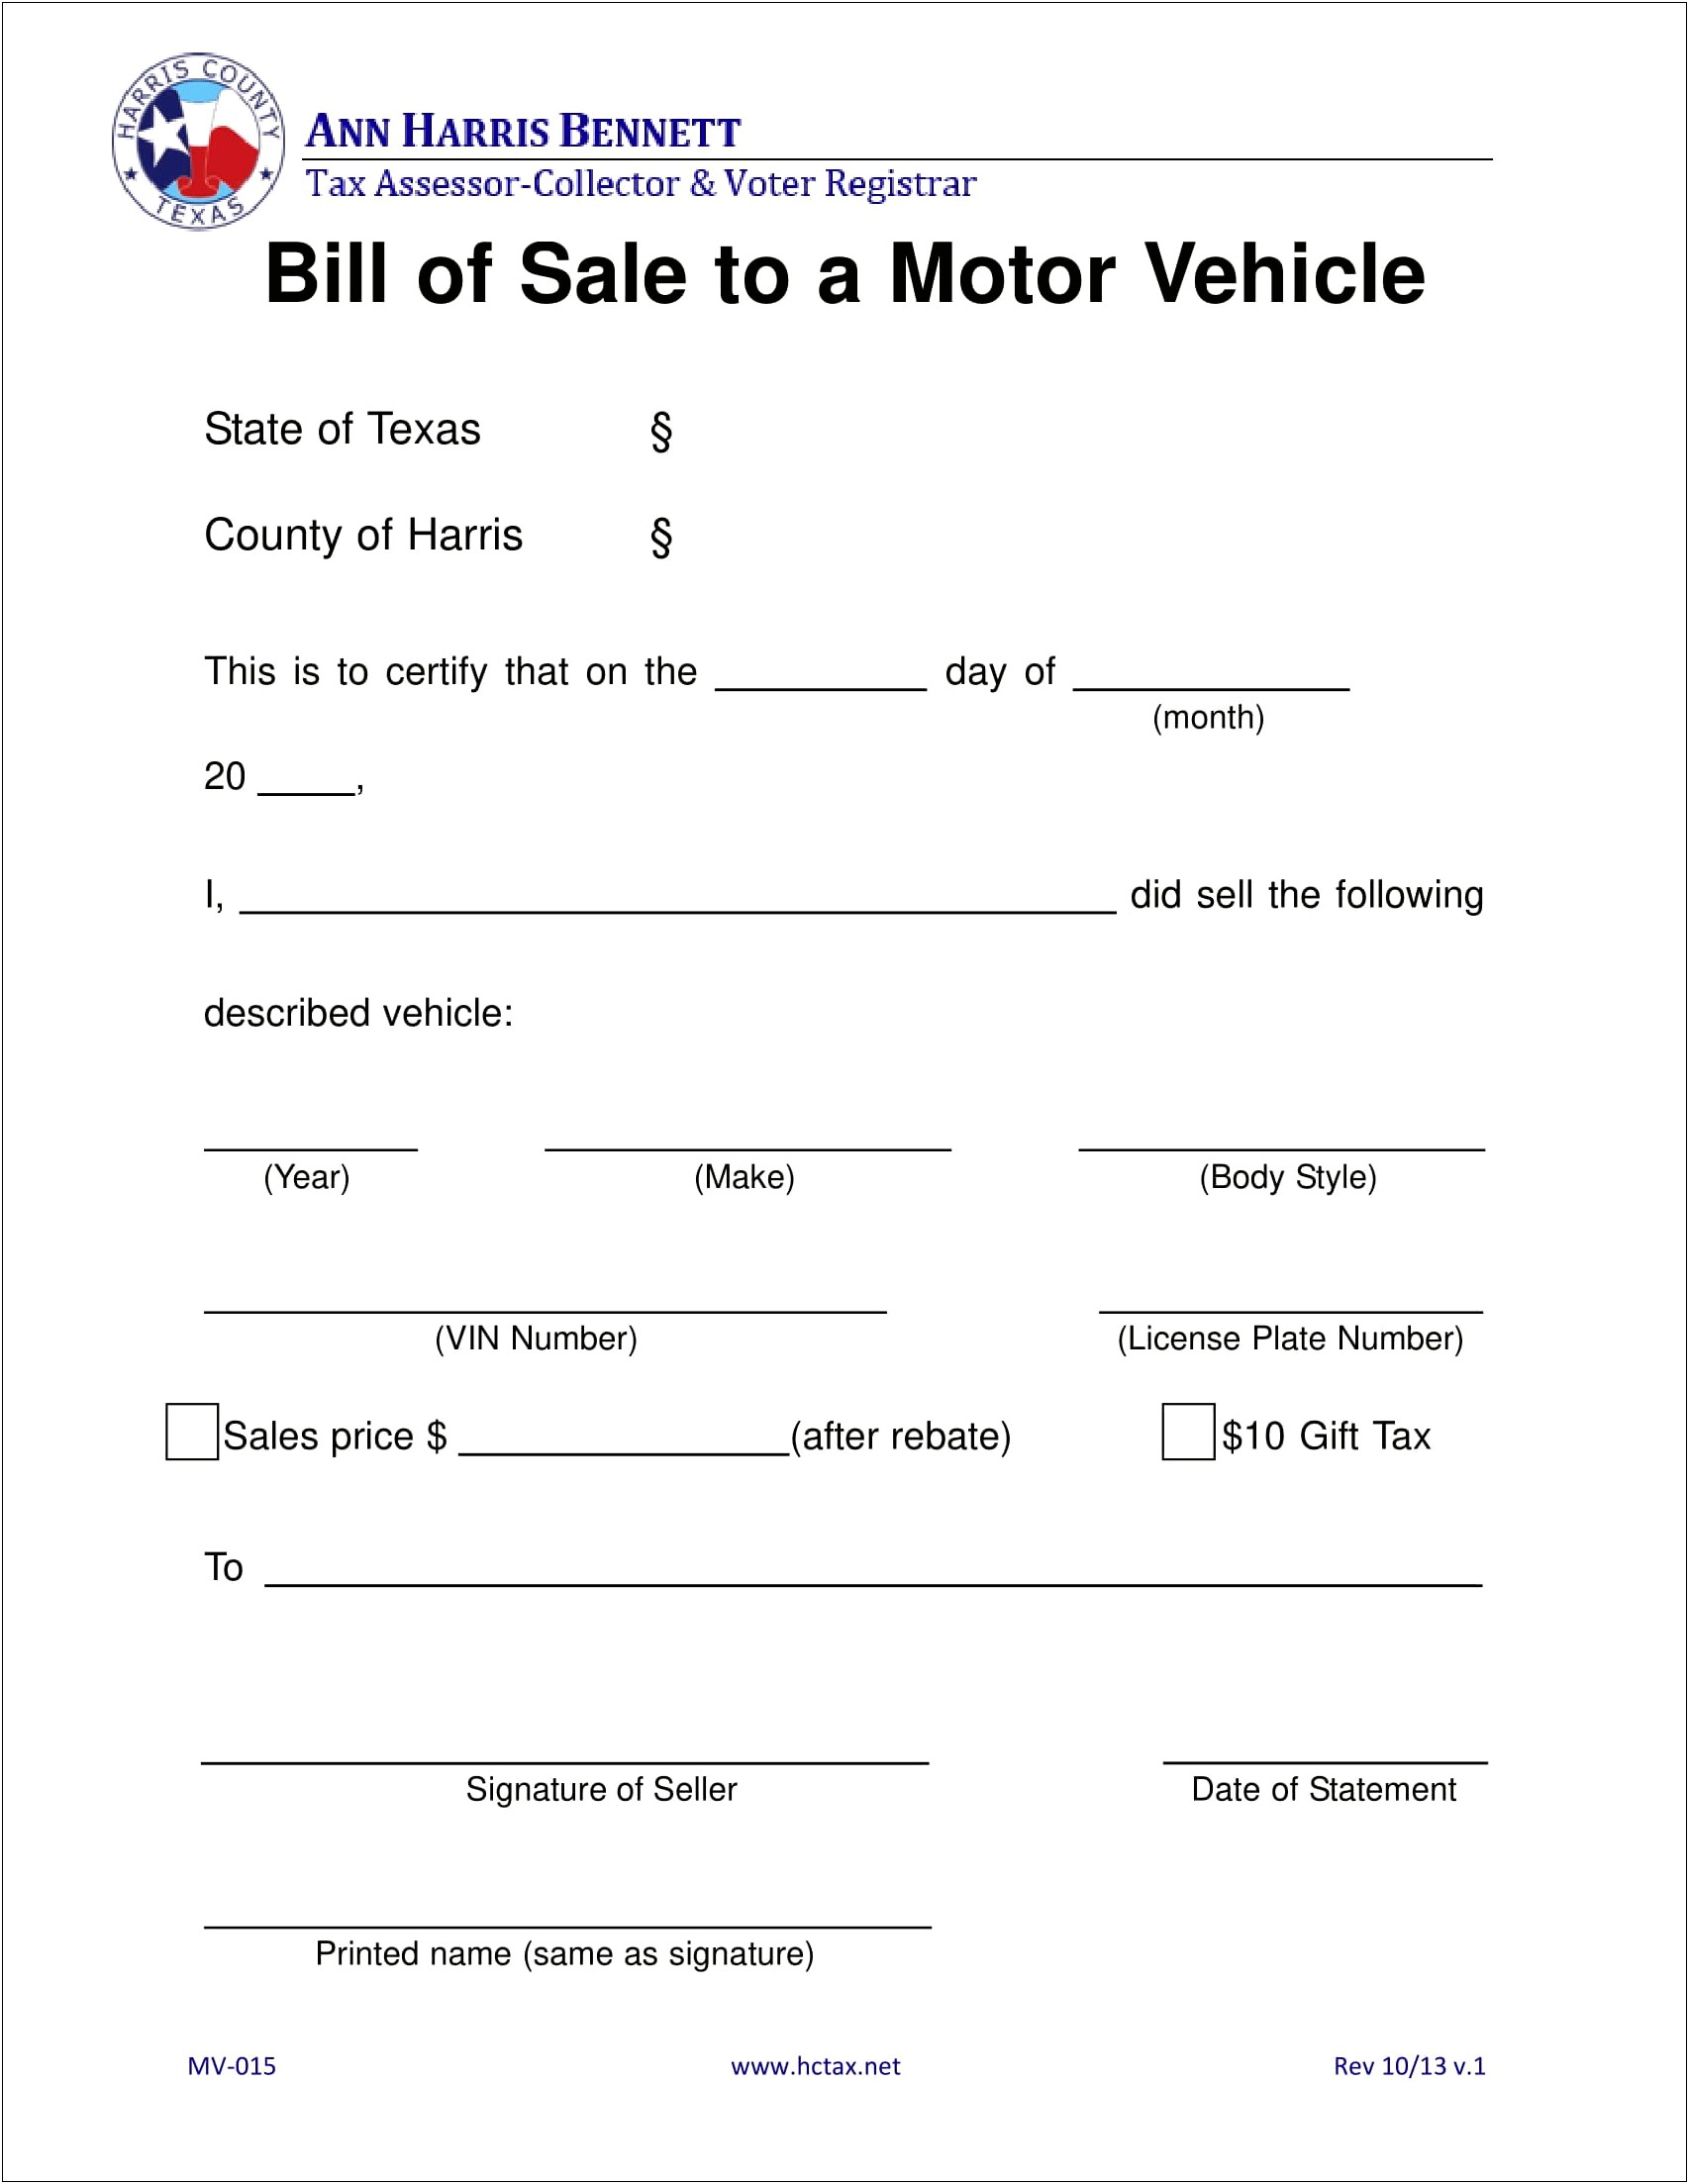 Free Vehicle Bill Of Sale Template Ga